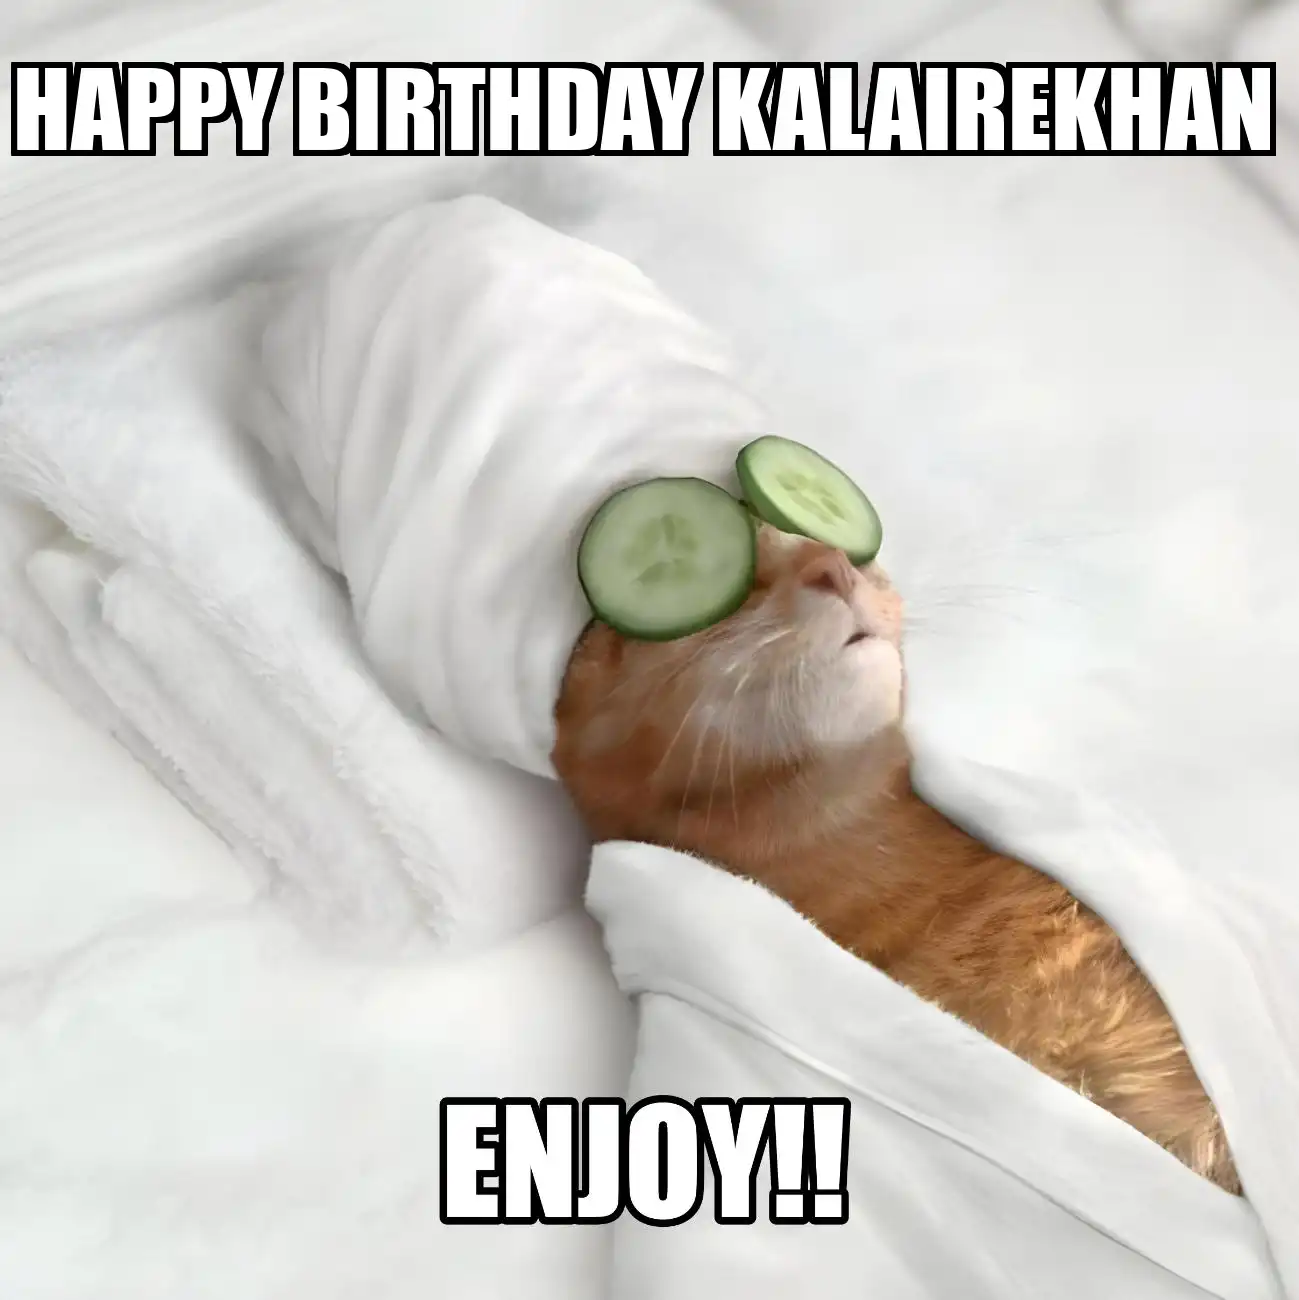 Happy Birthday Kalairekhan Enjoy Cat Meme